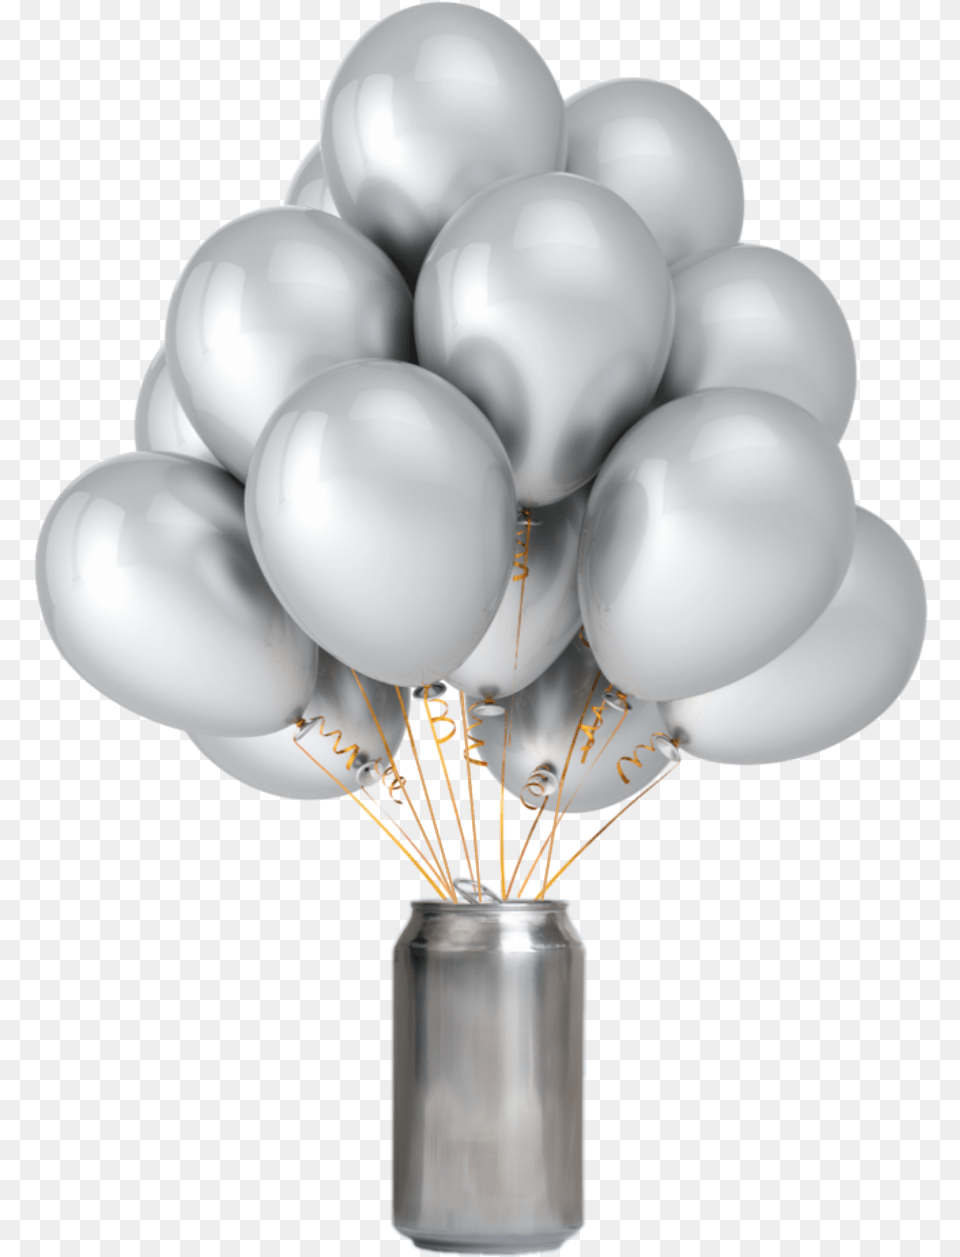 Report Abuse Metallic Silver Balloons, Balloon, Light Free Png